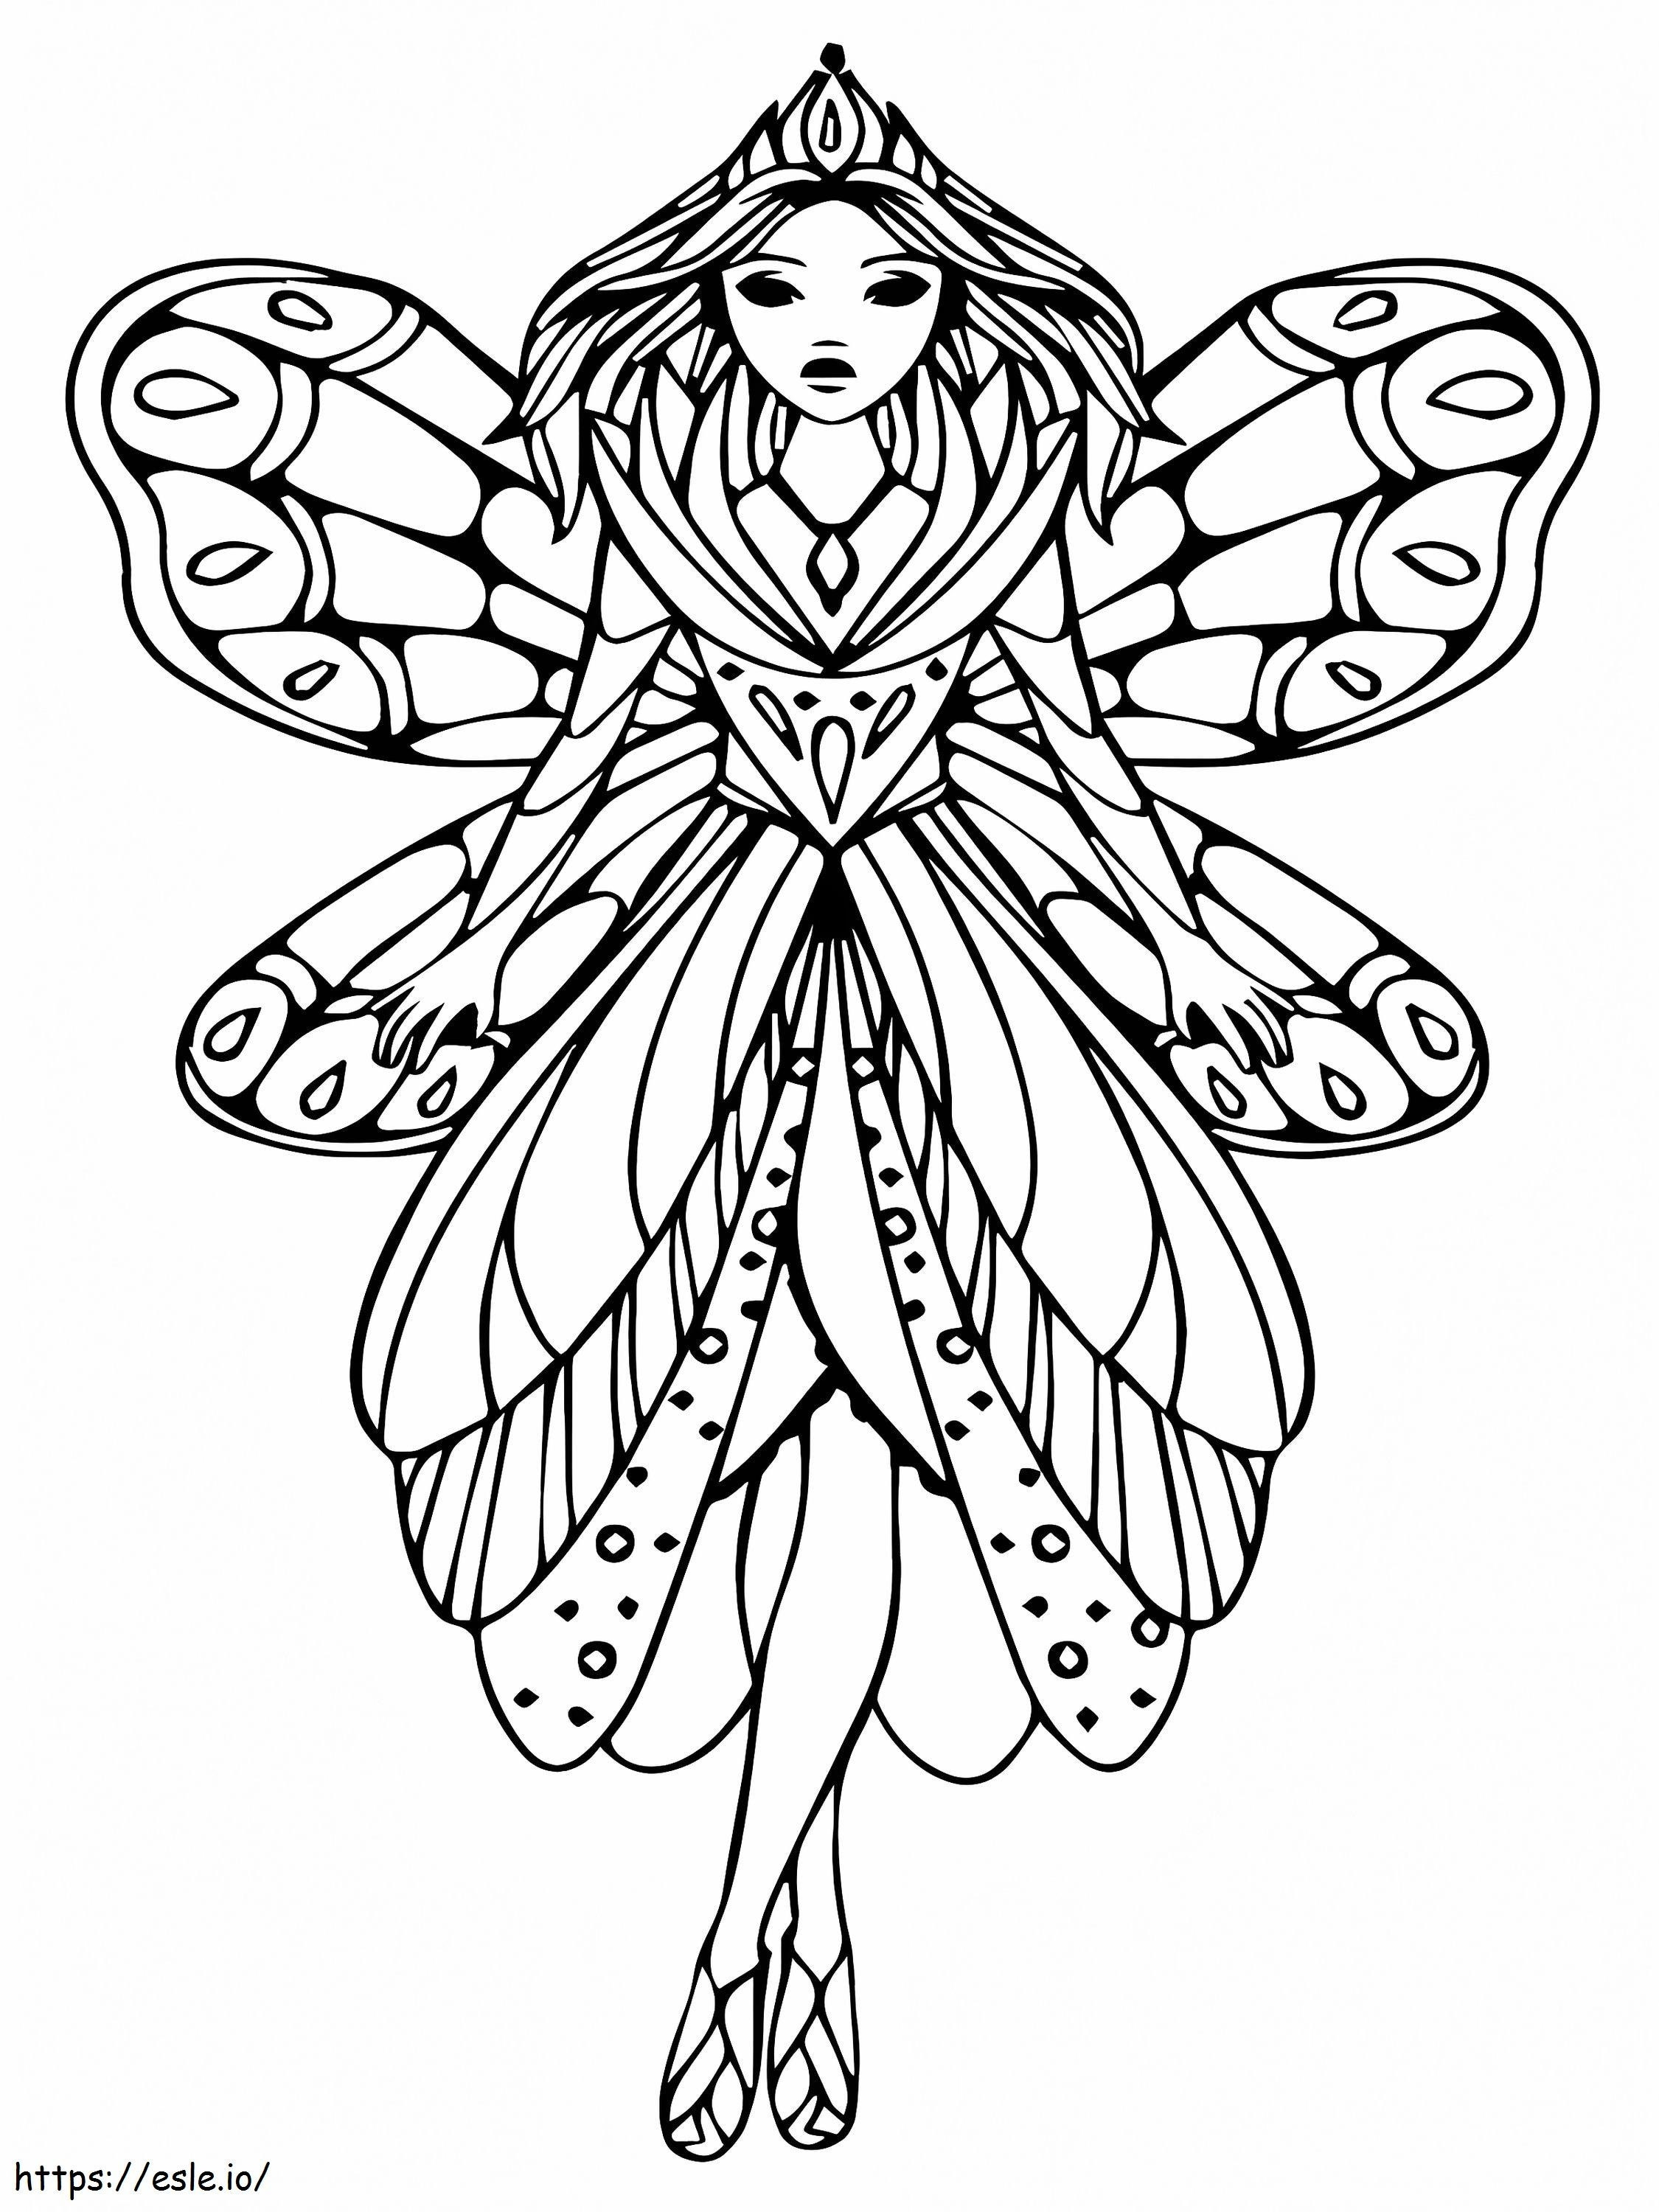 Gracious Fairy Princess coloring page